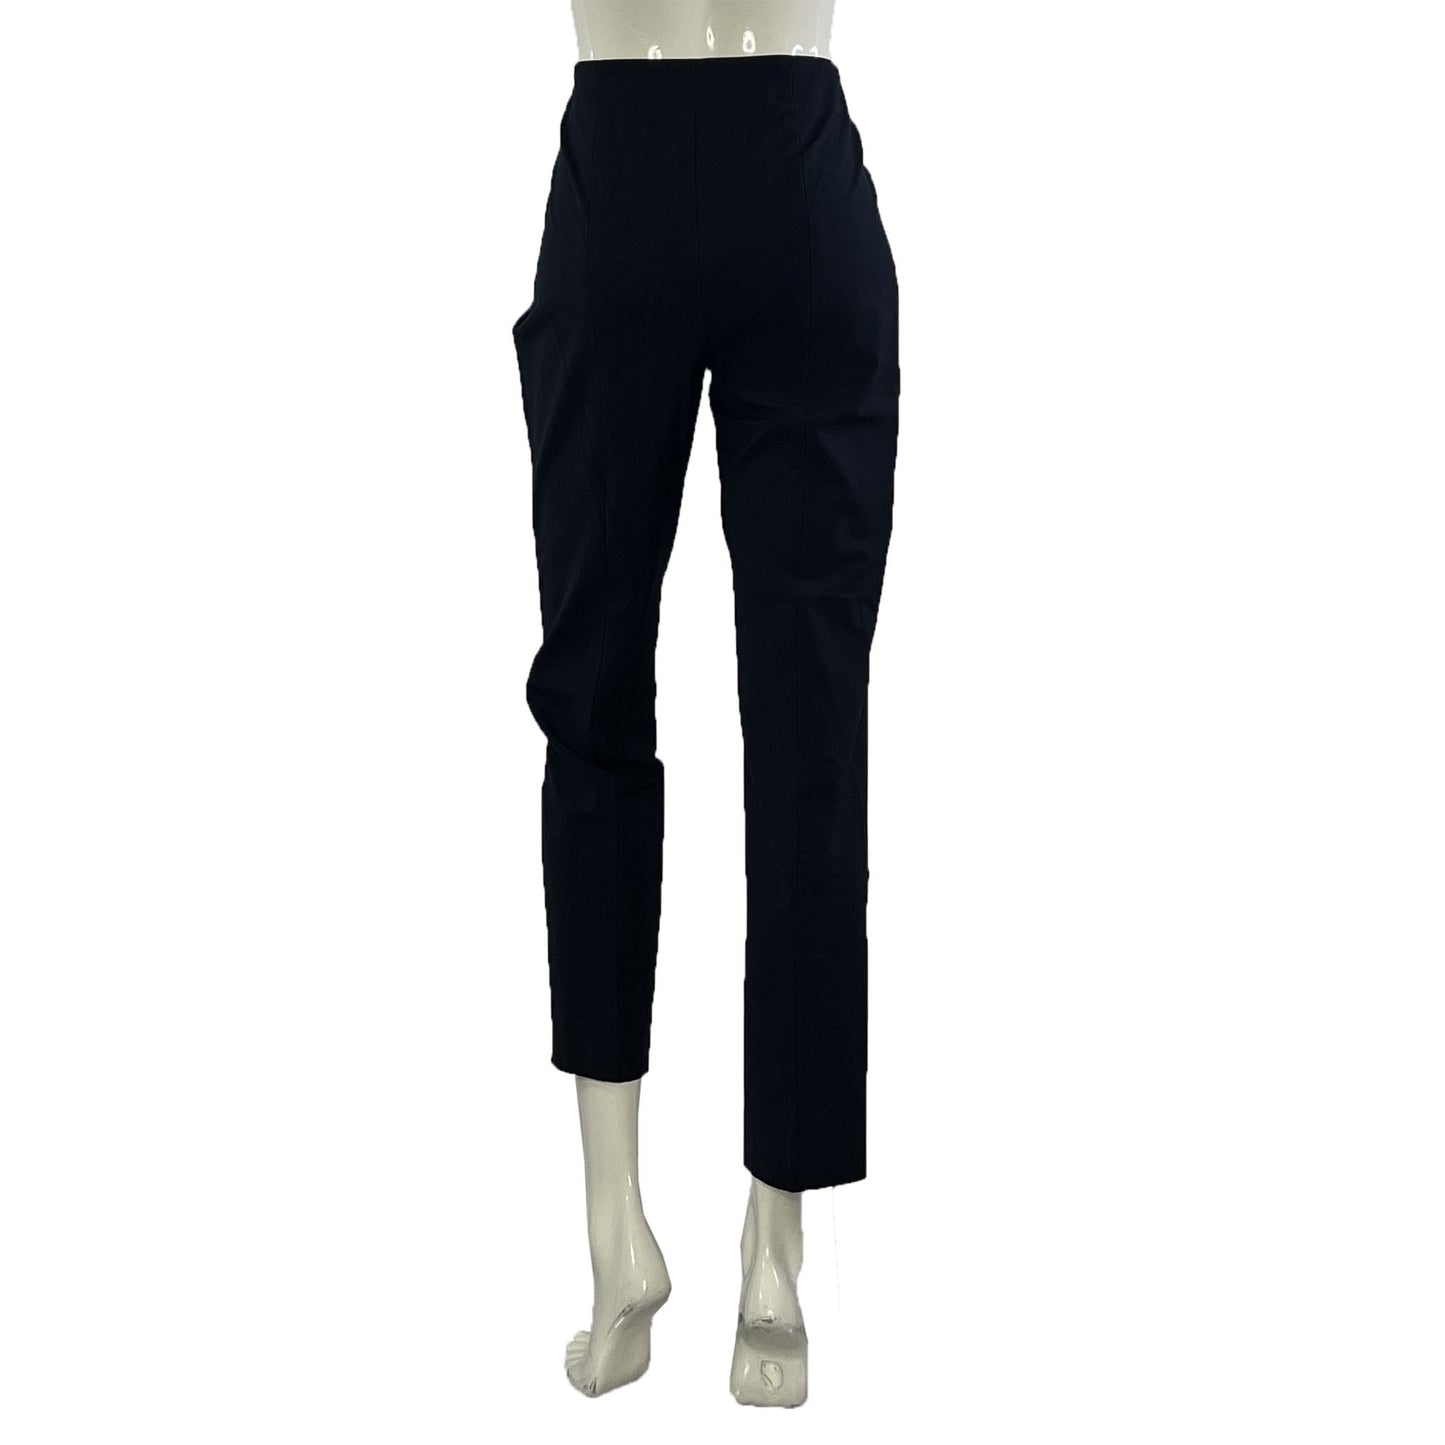 Talbots Dress Pants Side-Zipper Enclosure Navy Size 6 SKU 000415